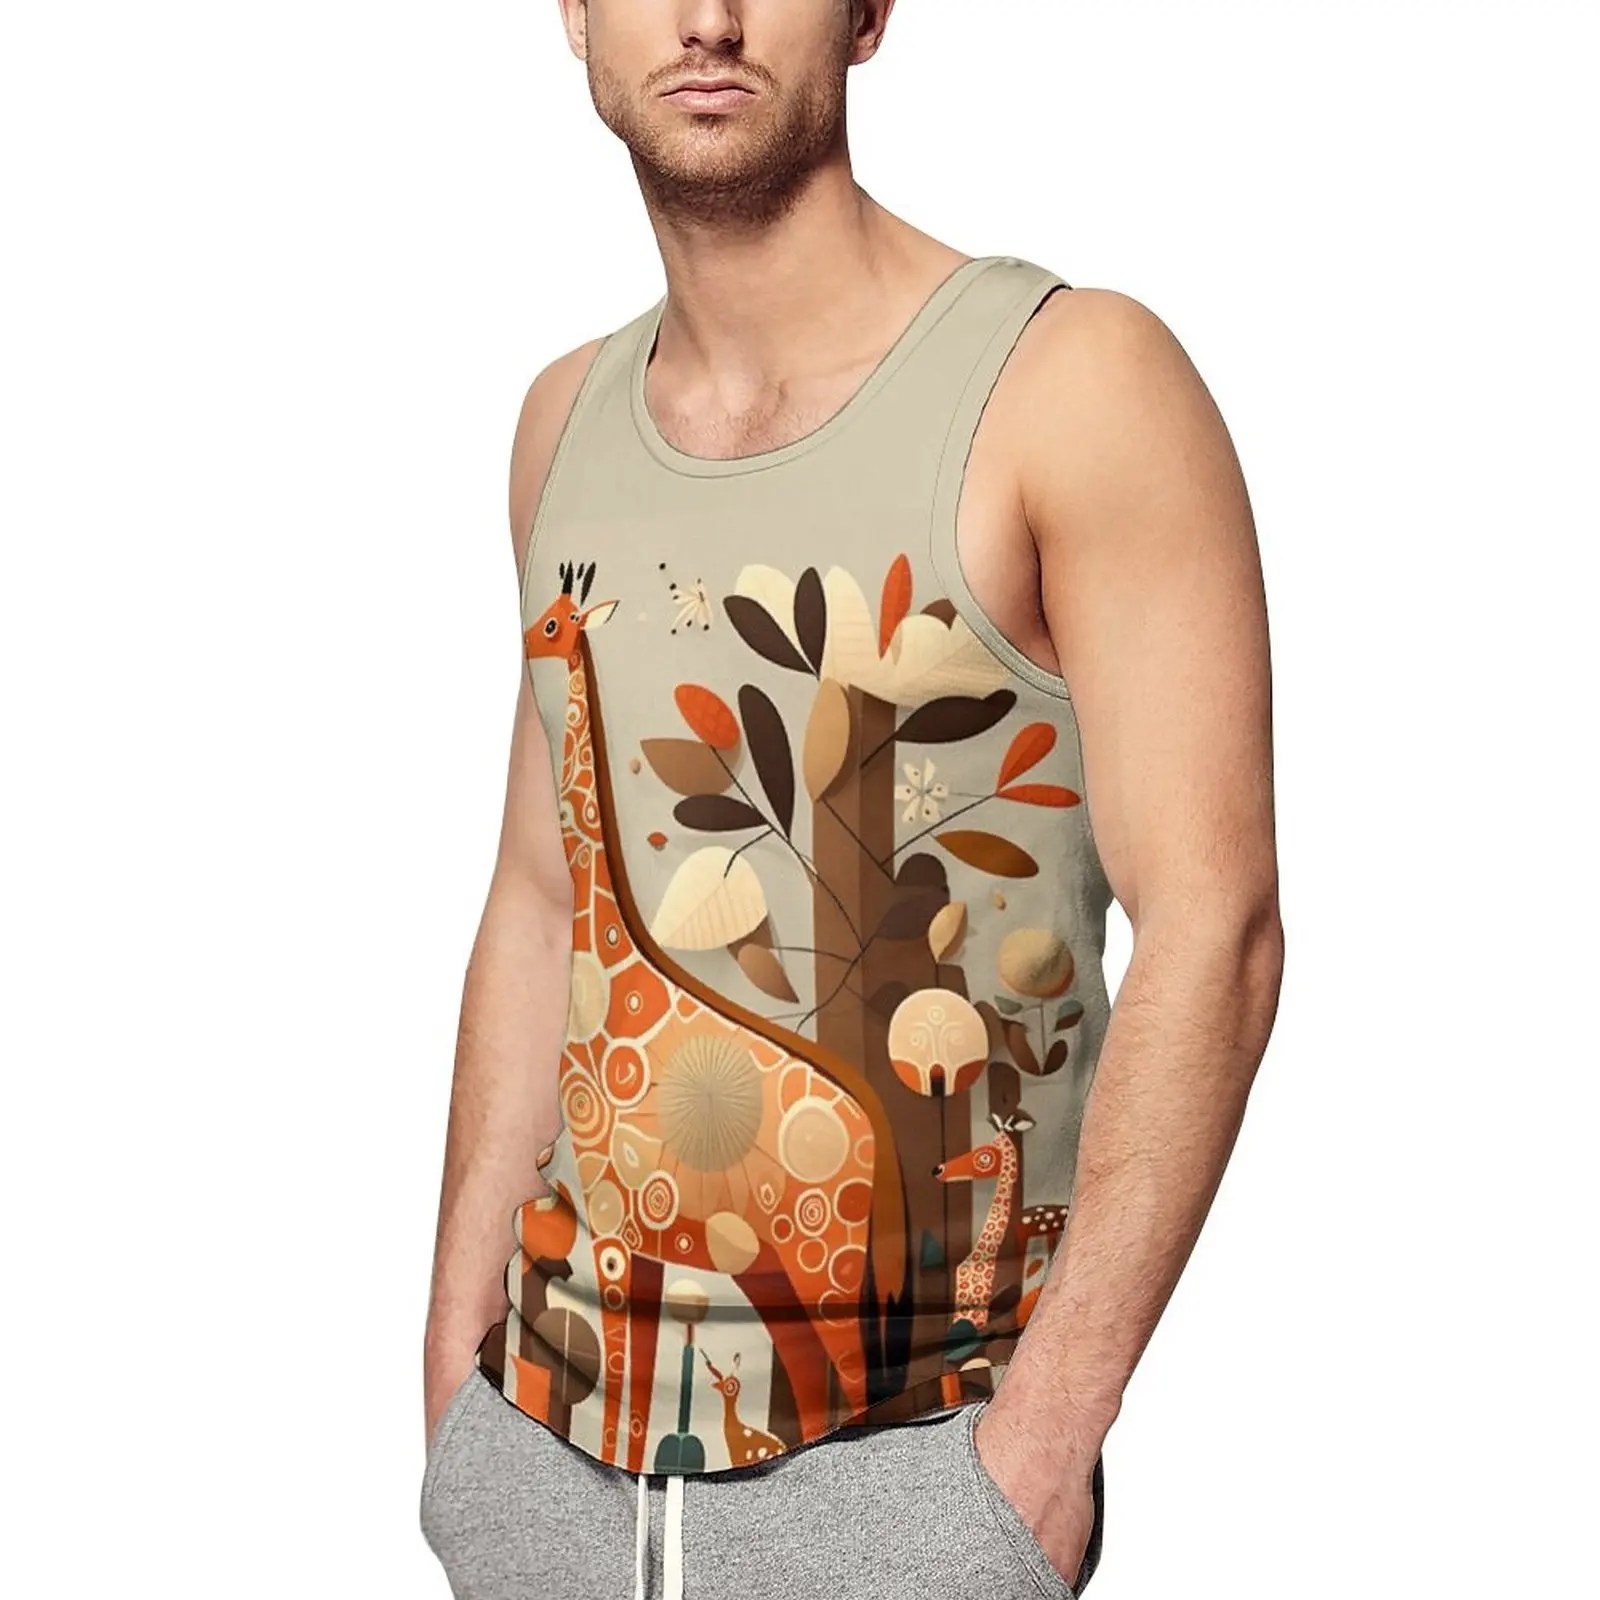 

Giraffe Tank Top Vibrant Illustrations Multi Style Muscle Tops Beach Workout Man's Custom Sleeveless Shirts Plus Size 4XL 5XL